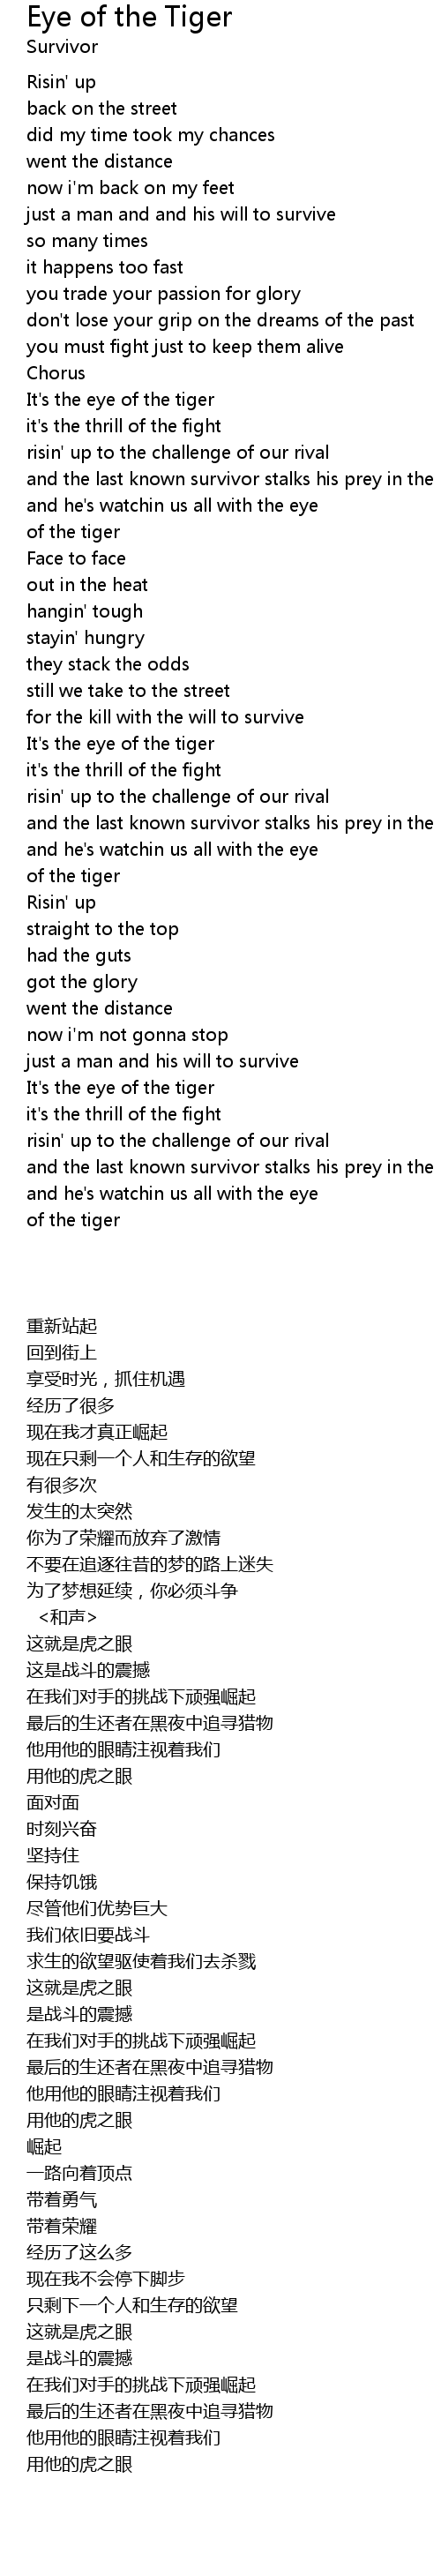 survivor eye of the tiger lyrics